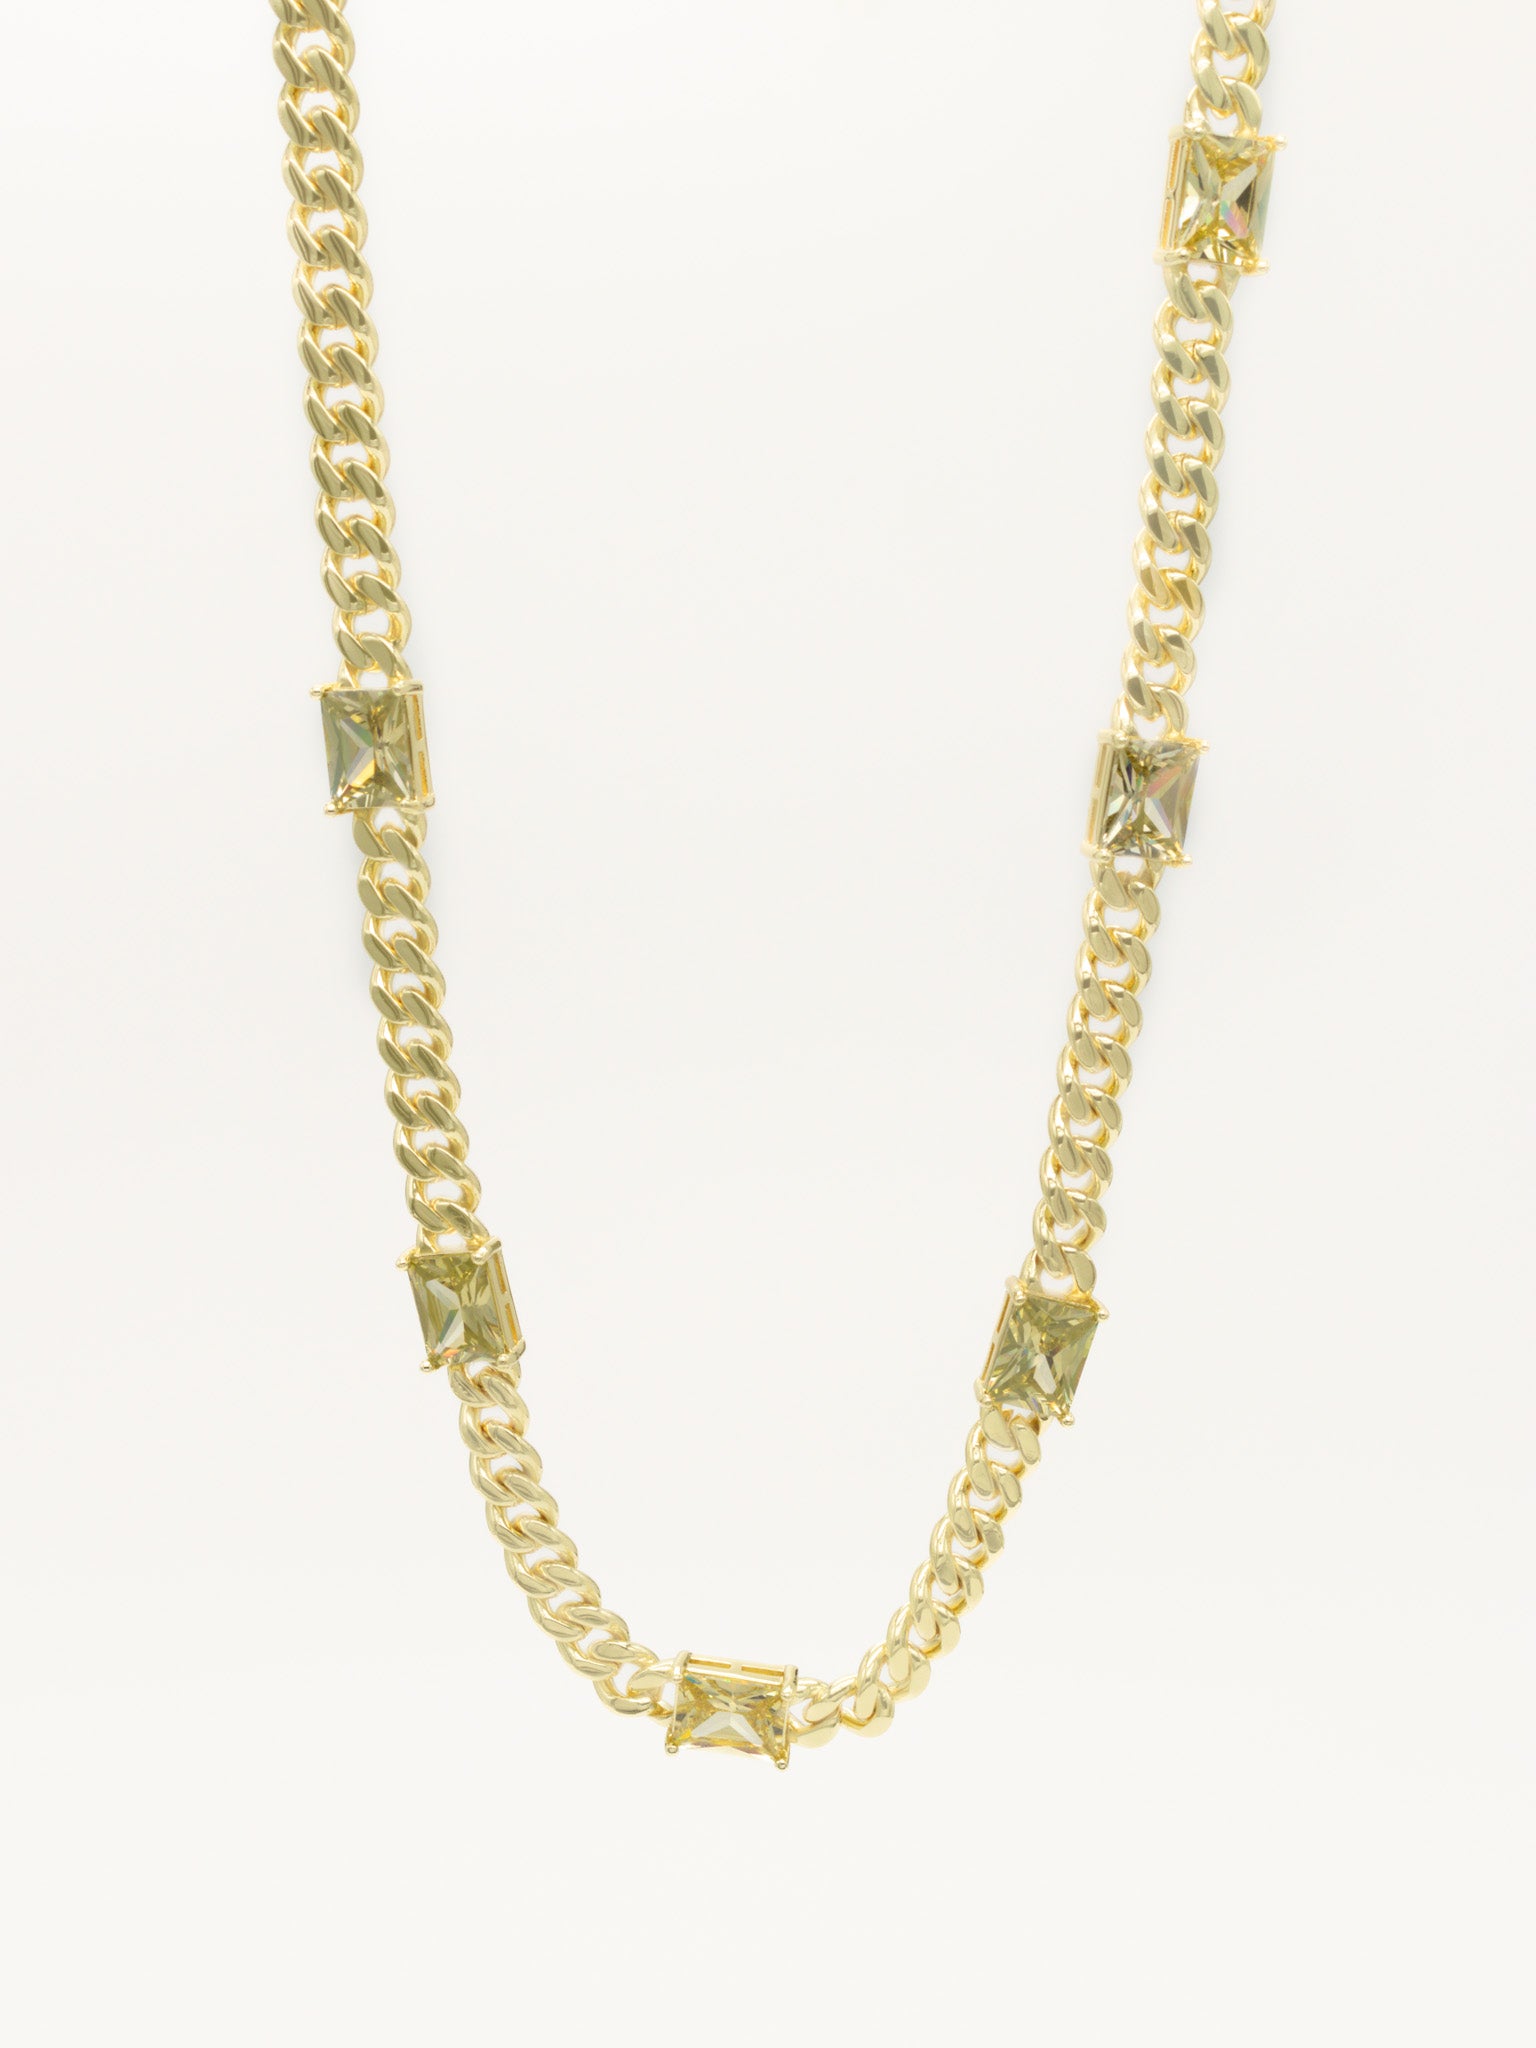 Matcha Crystal Chain Gold